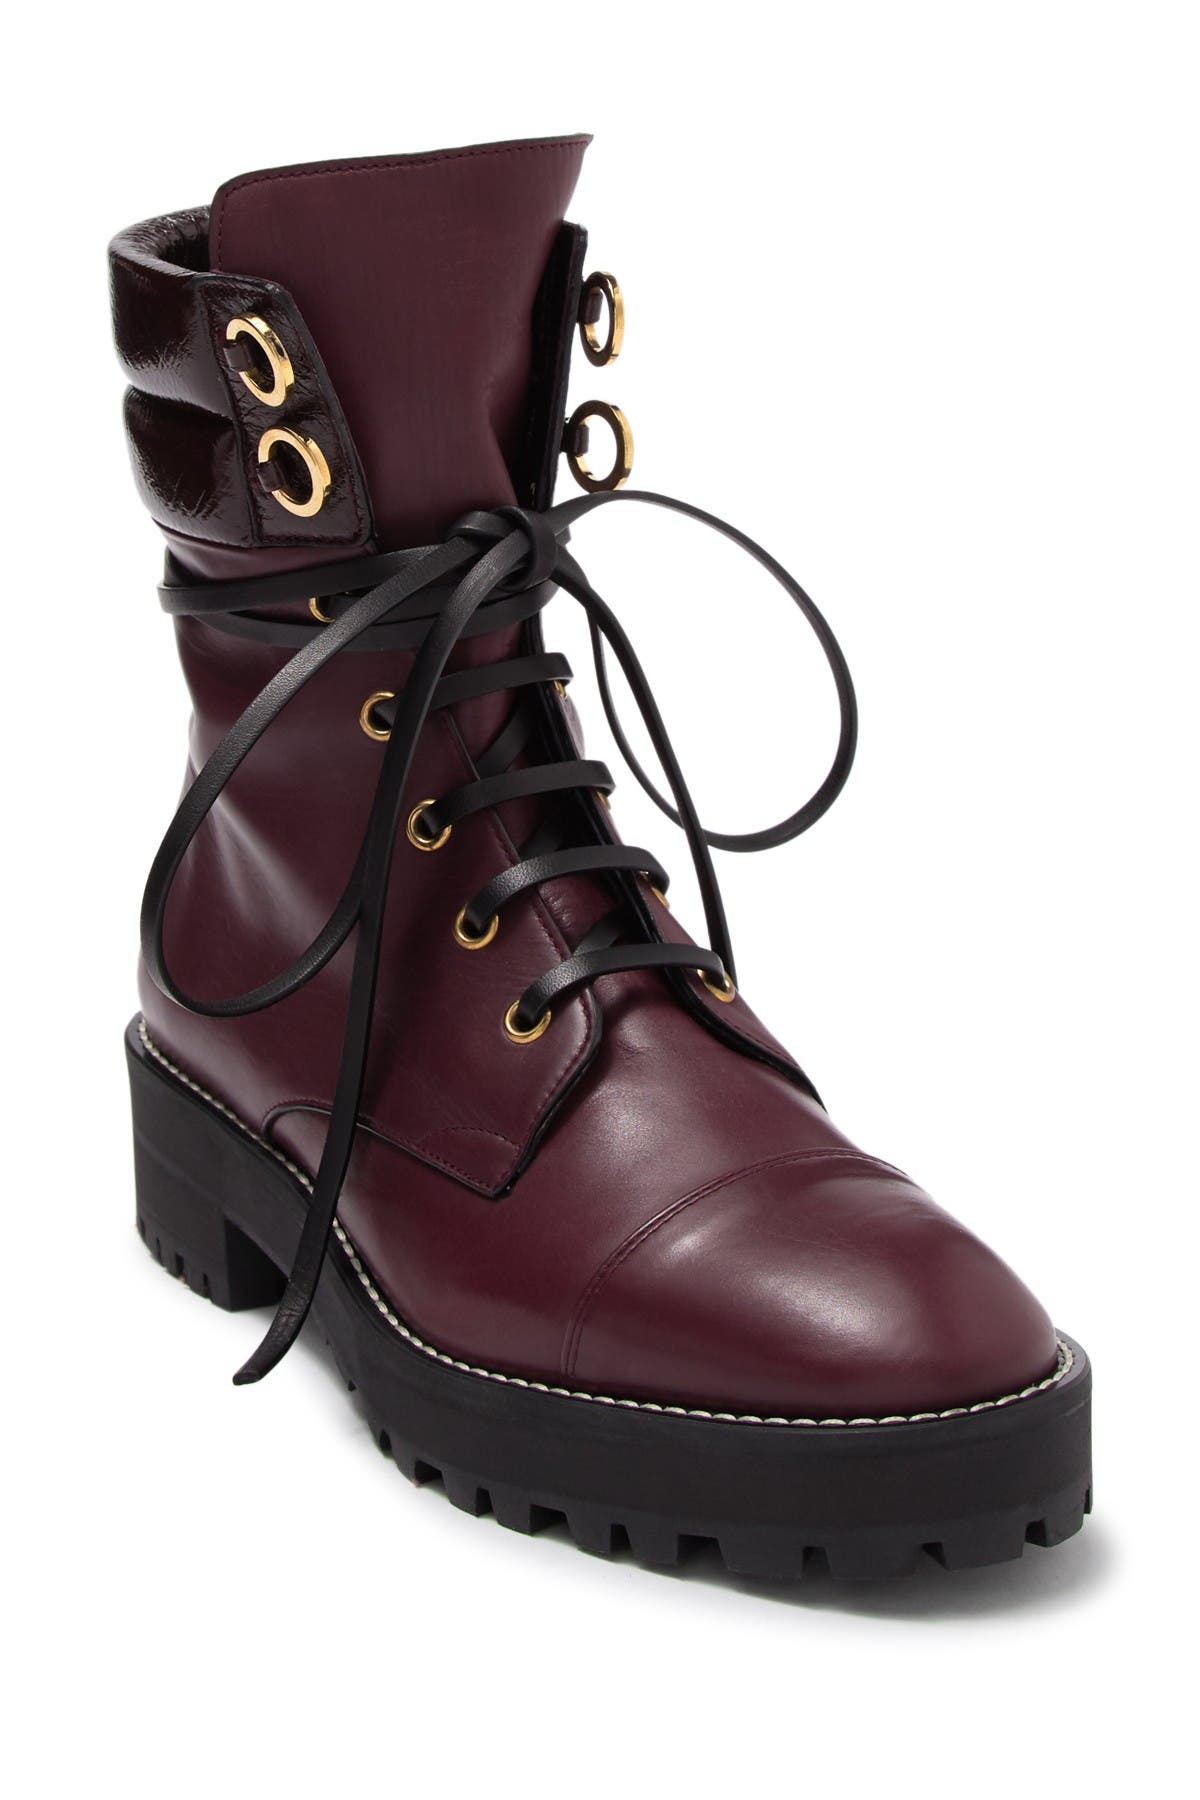 stuart weitzman women's lexy round toe leather lace up boots